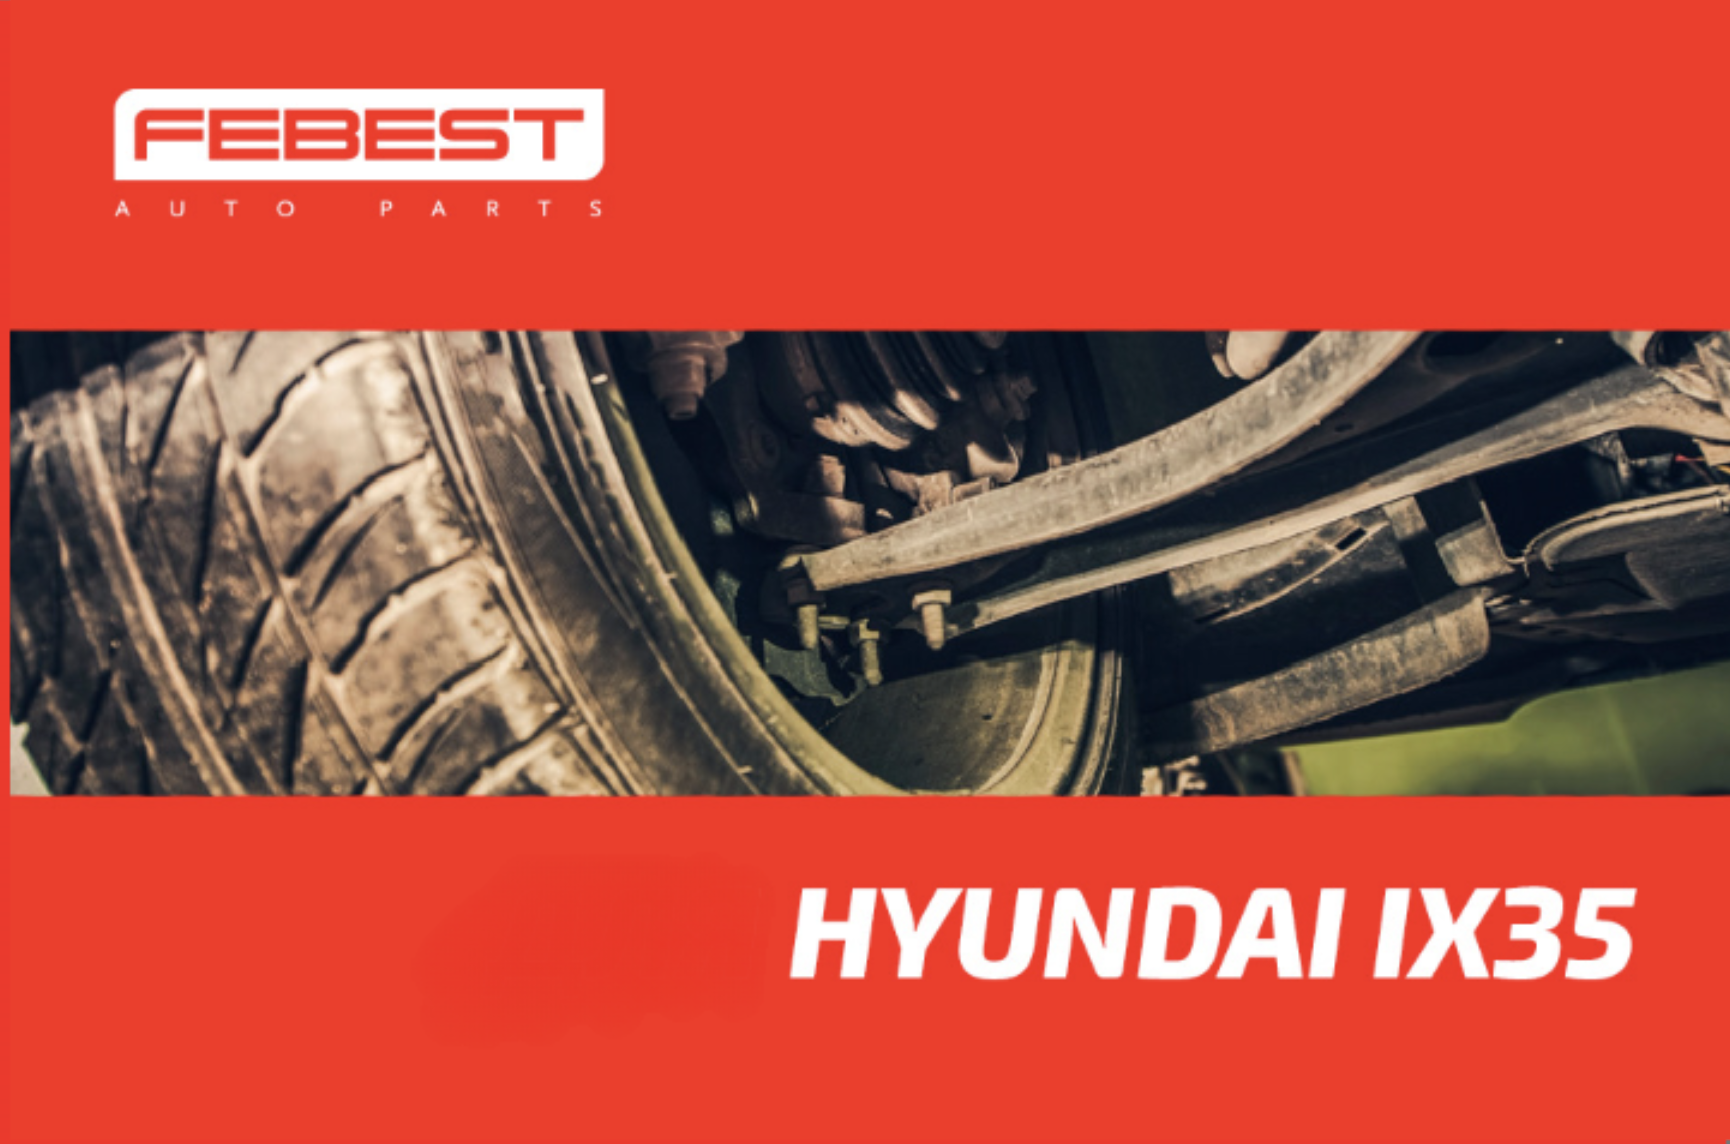 FEBEST spare parts for Hyundai ix35